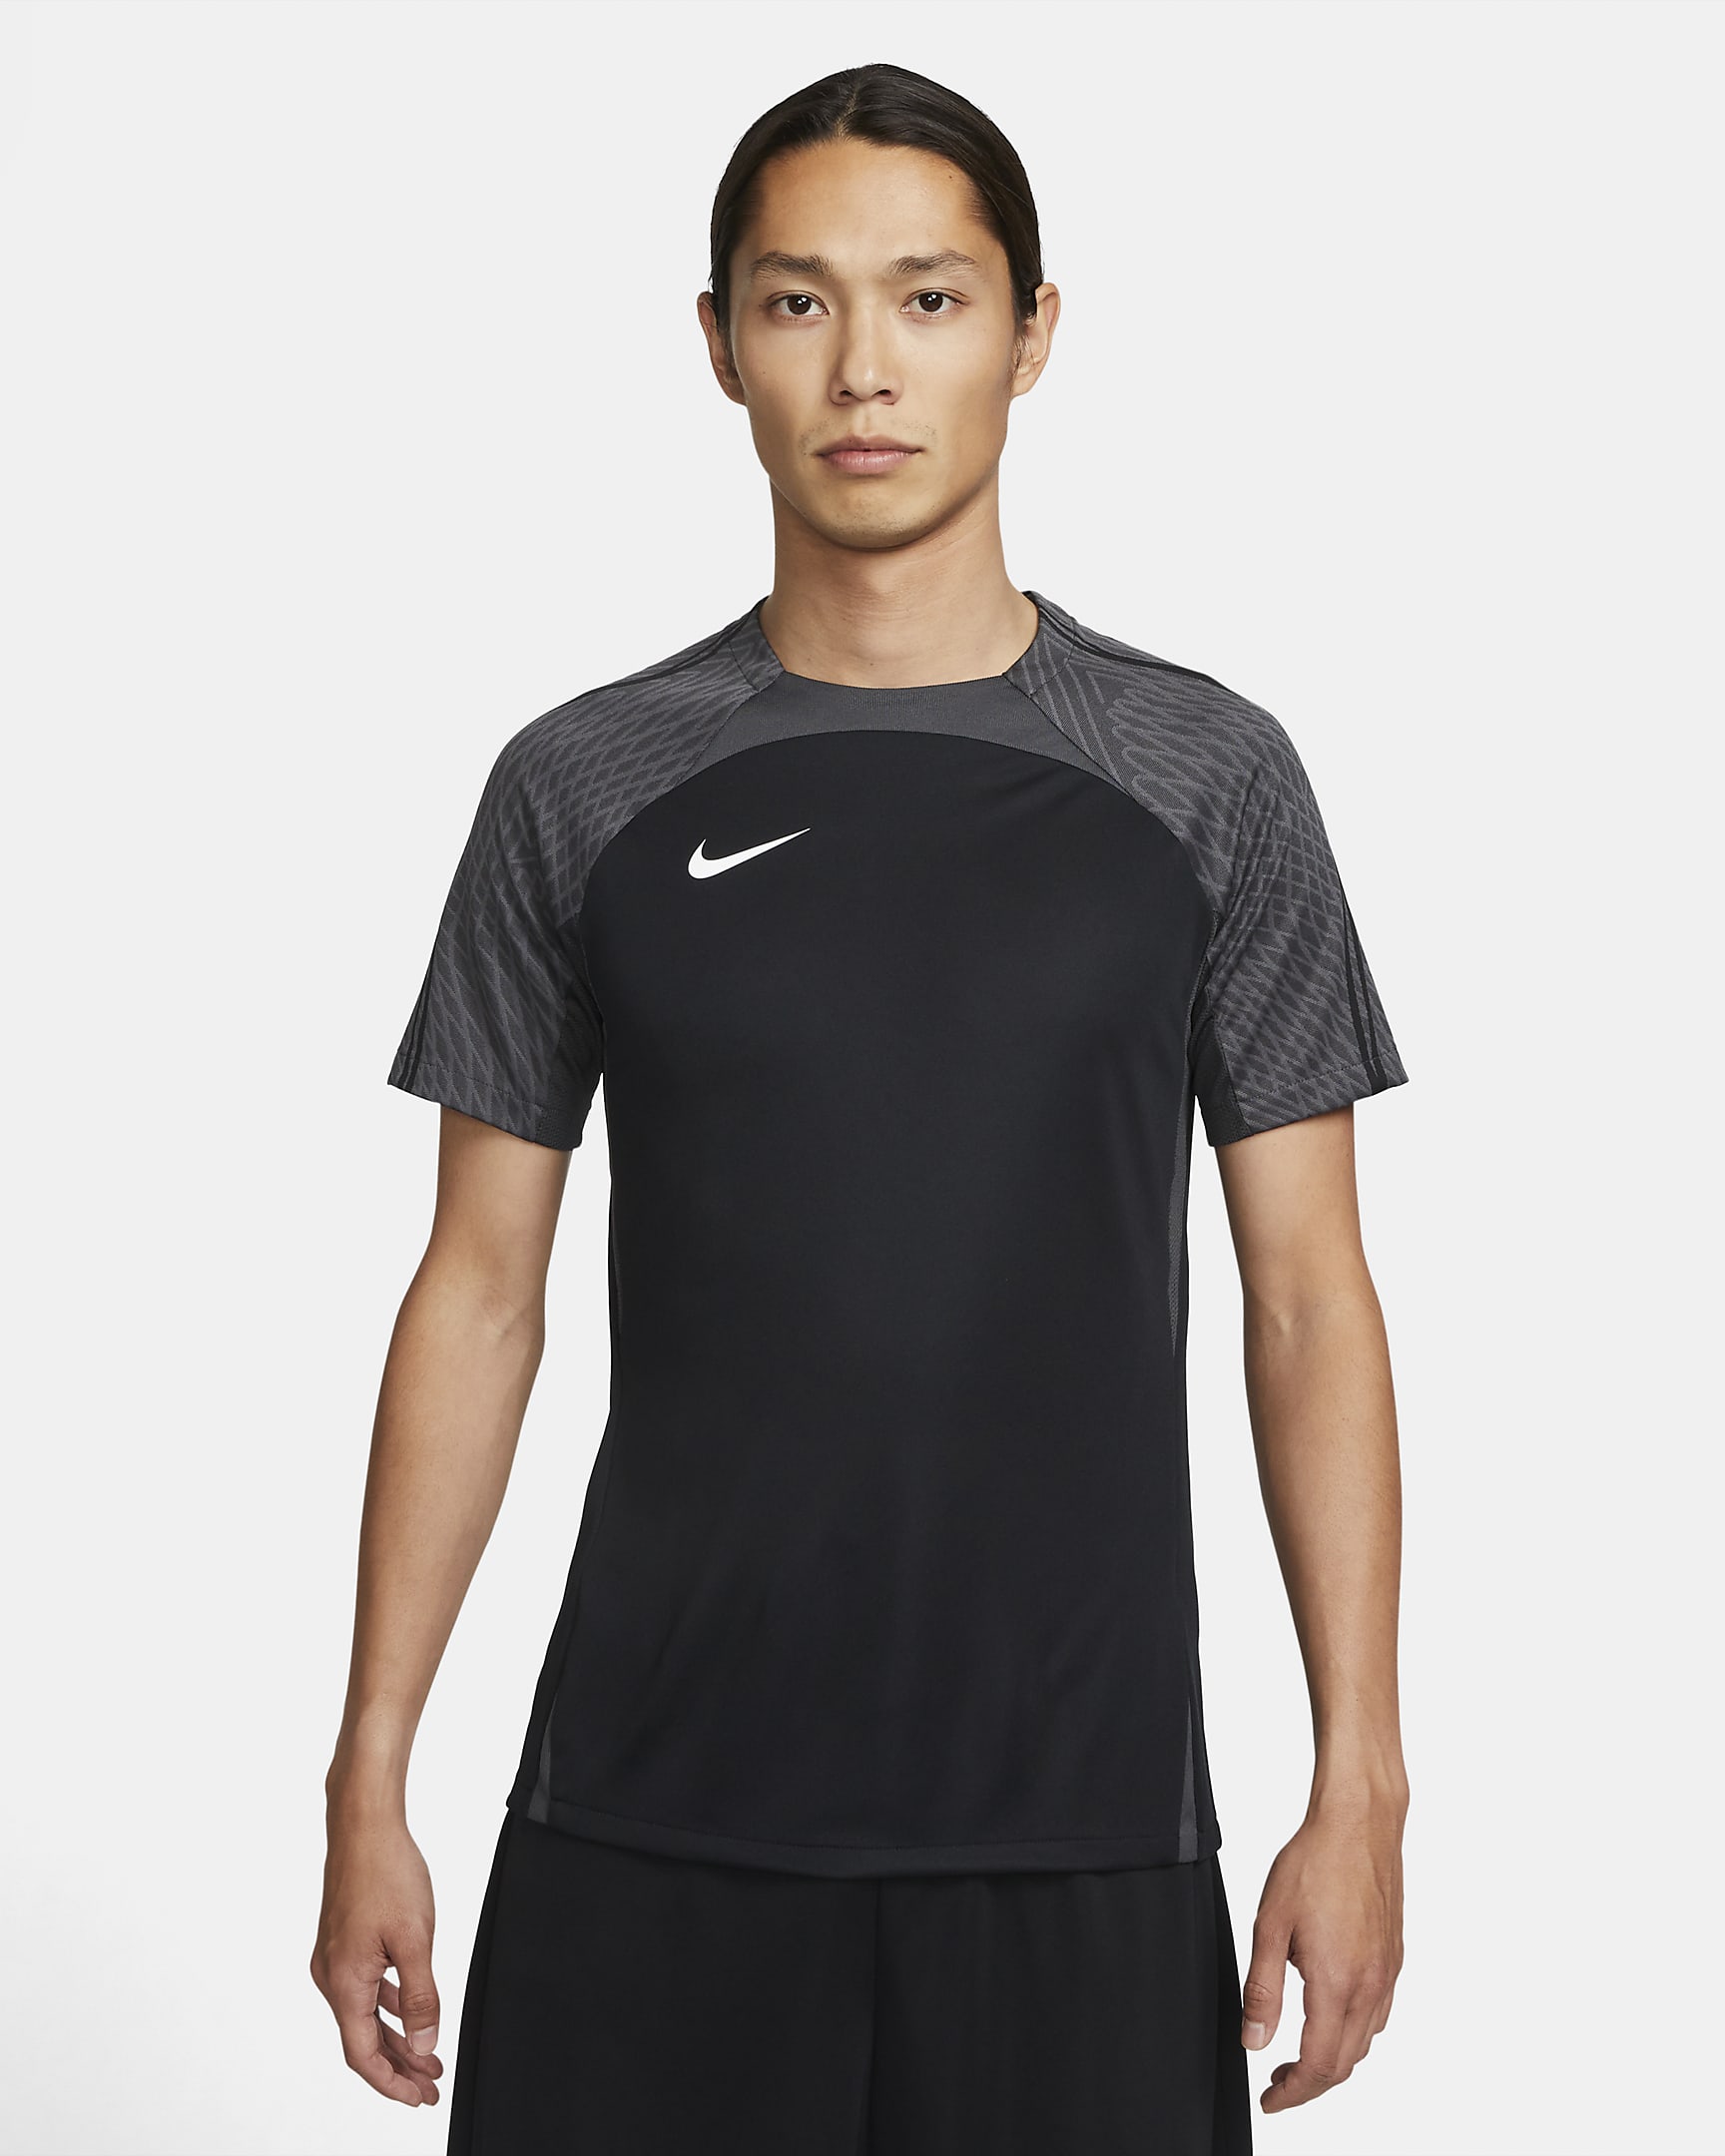 Nike Dri-FIT Strike Men's Short-Sleeve Football Top. Nike SG